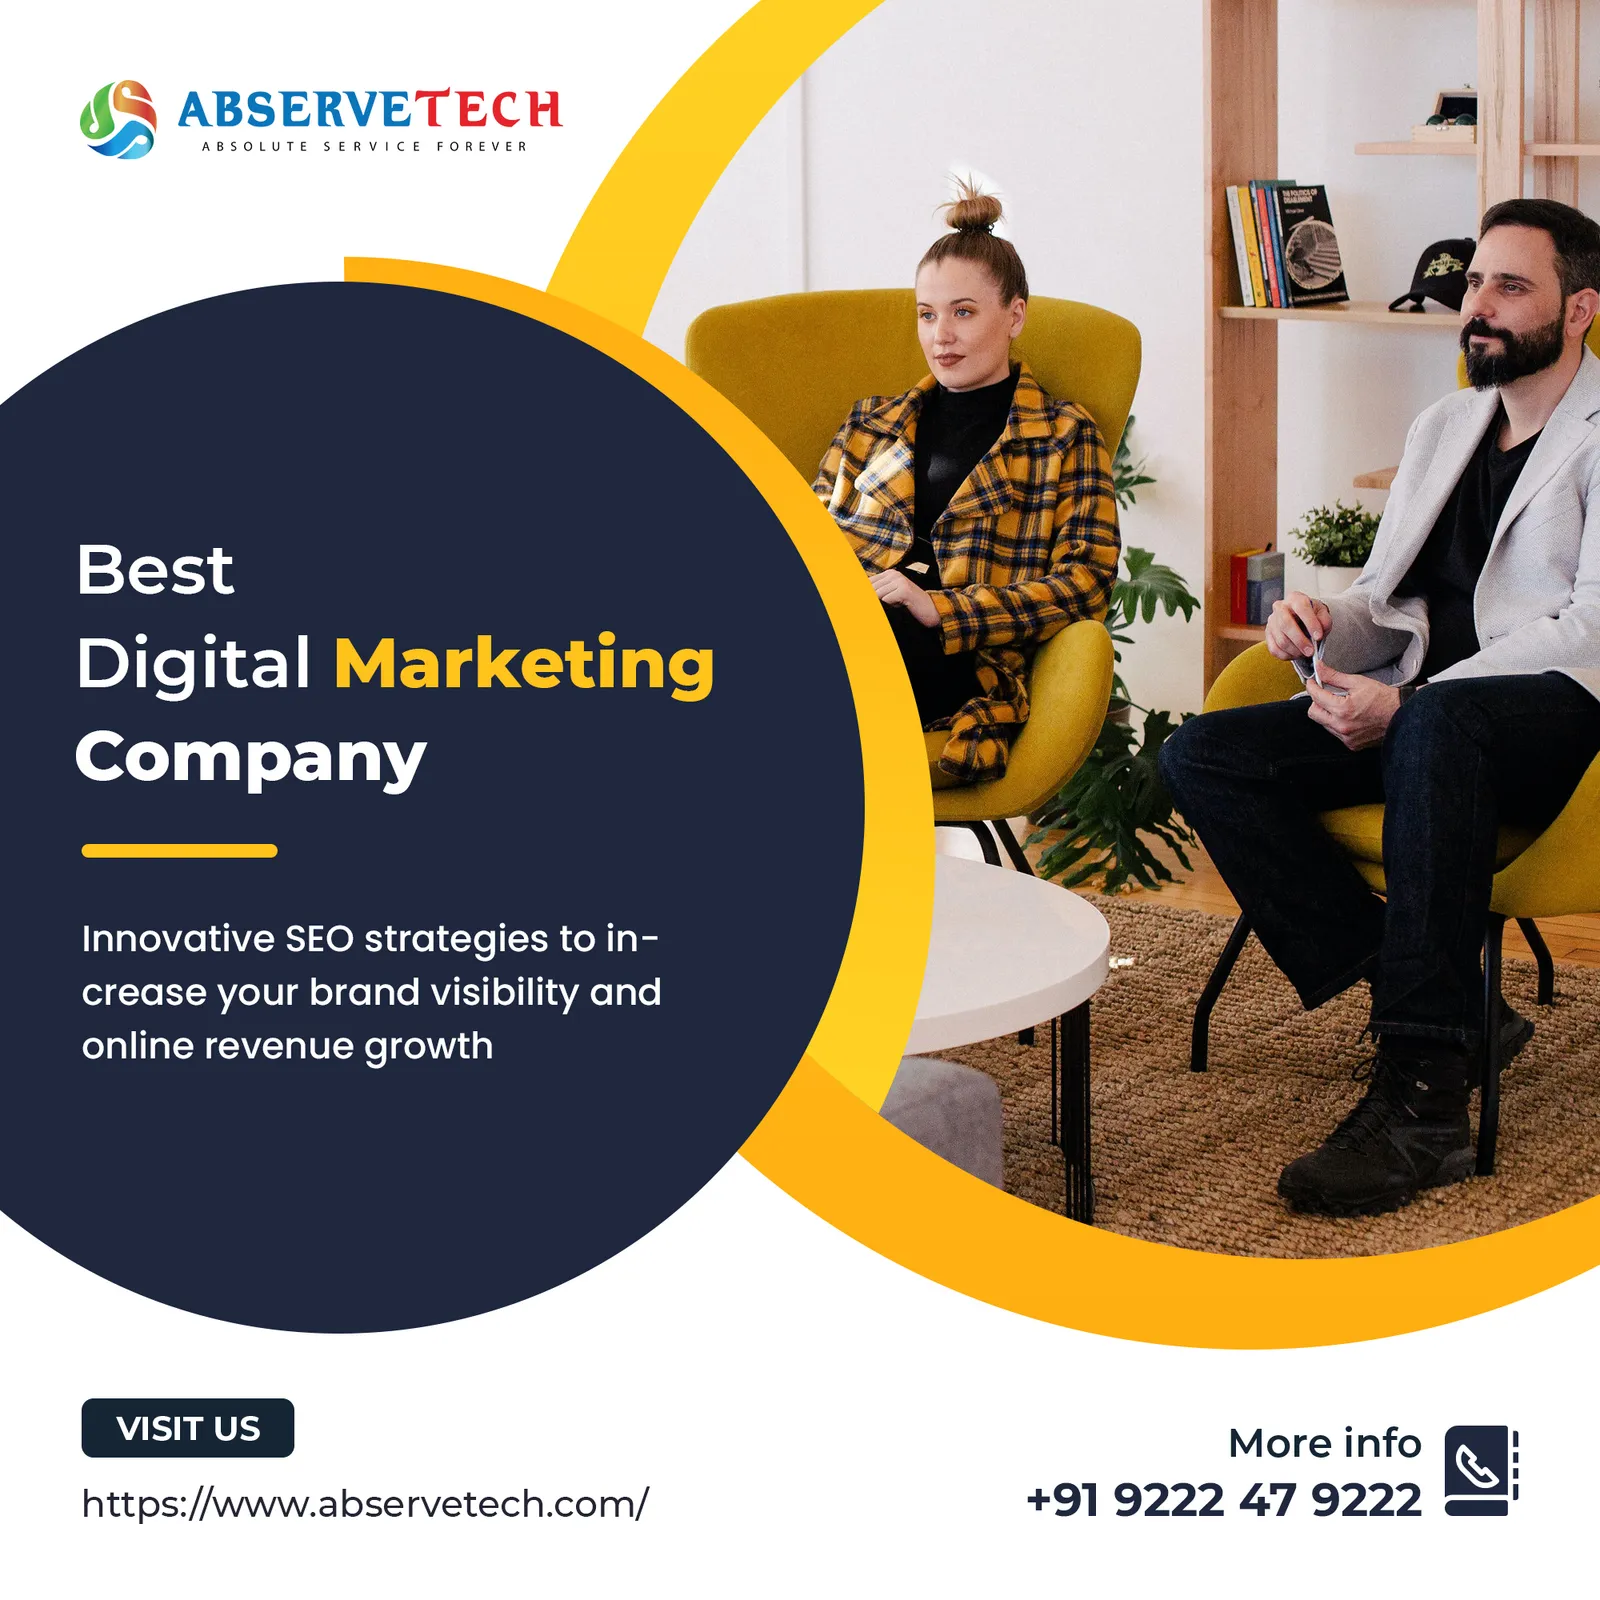 Best Digital Marketing Company - Abservetech